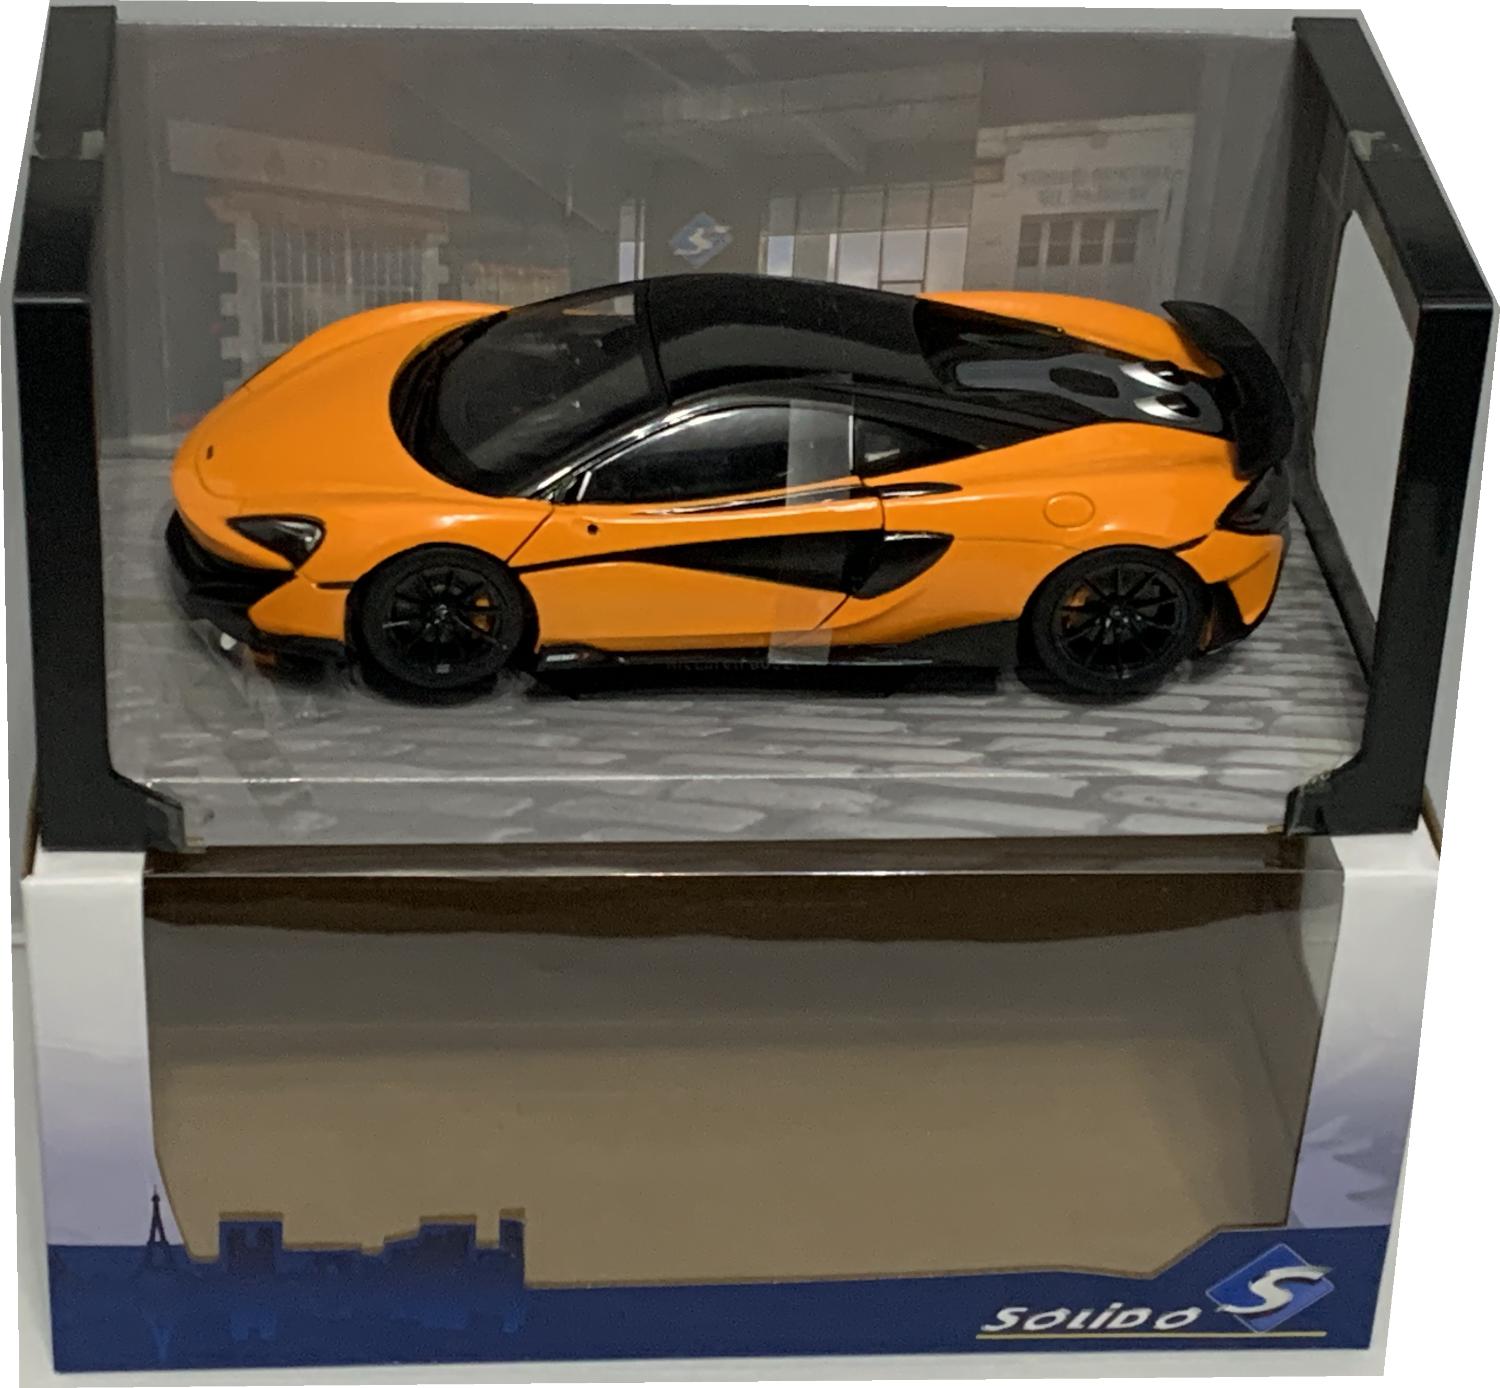 McLaren 600LT 2018 in orange 1:18 scale model from Solido